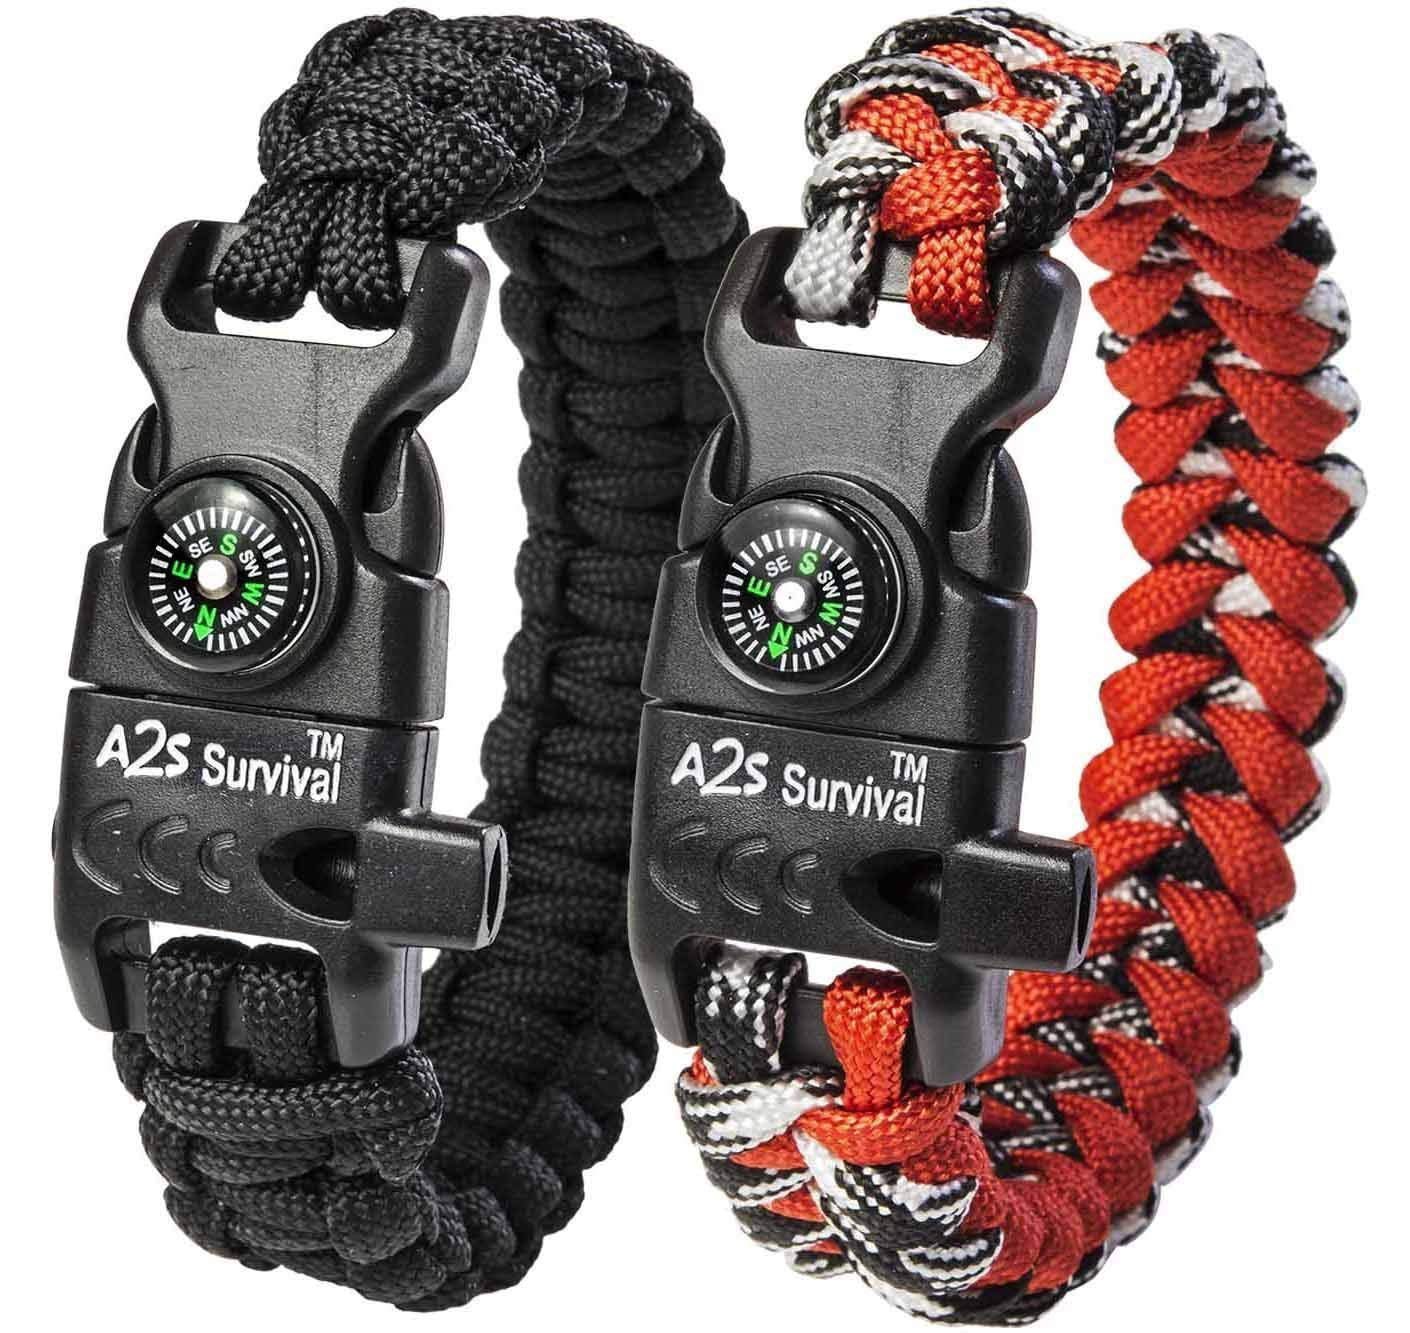 A2S Protection Paracord Bracelet K2-Peak - Survival Gear Kit Embedded  Compass, Fire Starter, Emergency Knife & Whistle (Black/Red 8) 